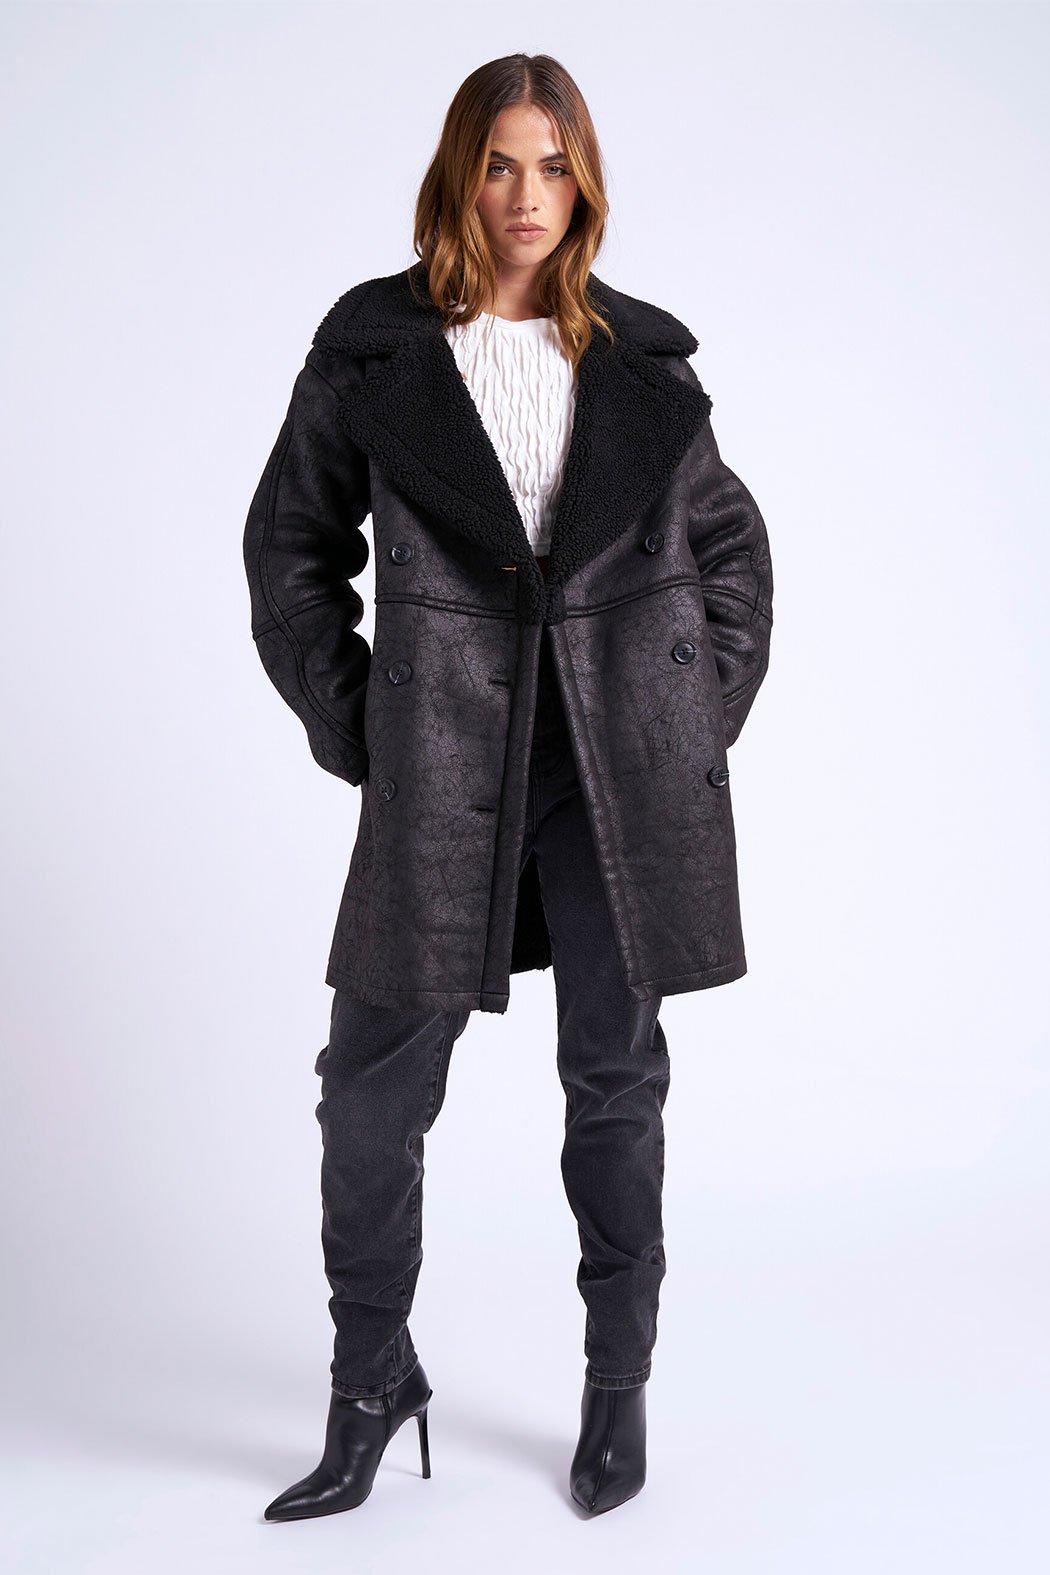 Пальто средней длины Urban Bliss, черный толстовка jeep средней длины карманы капюшон карманы размер xl розовый